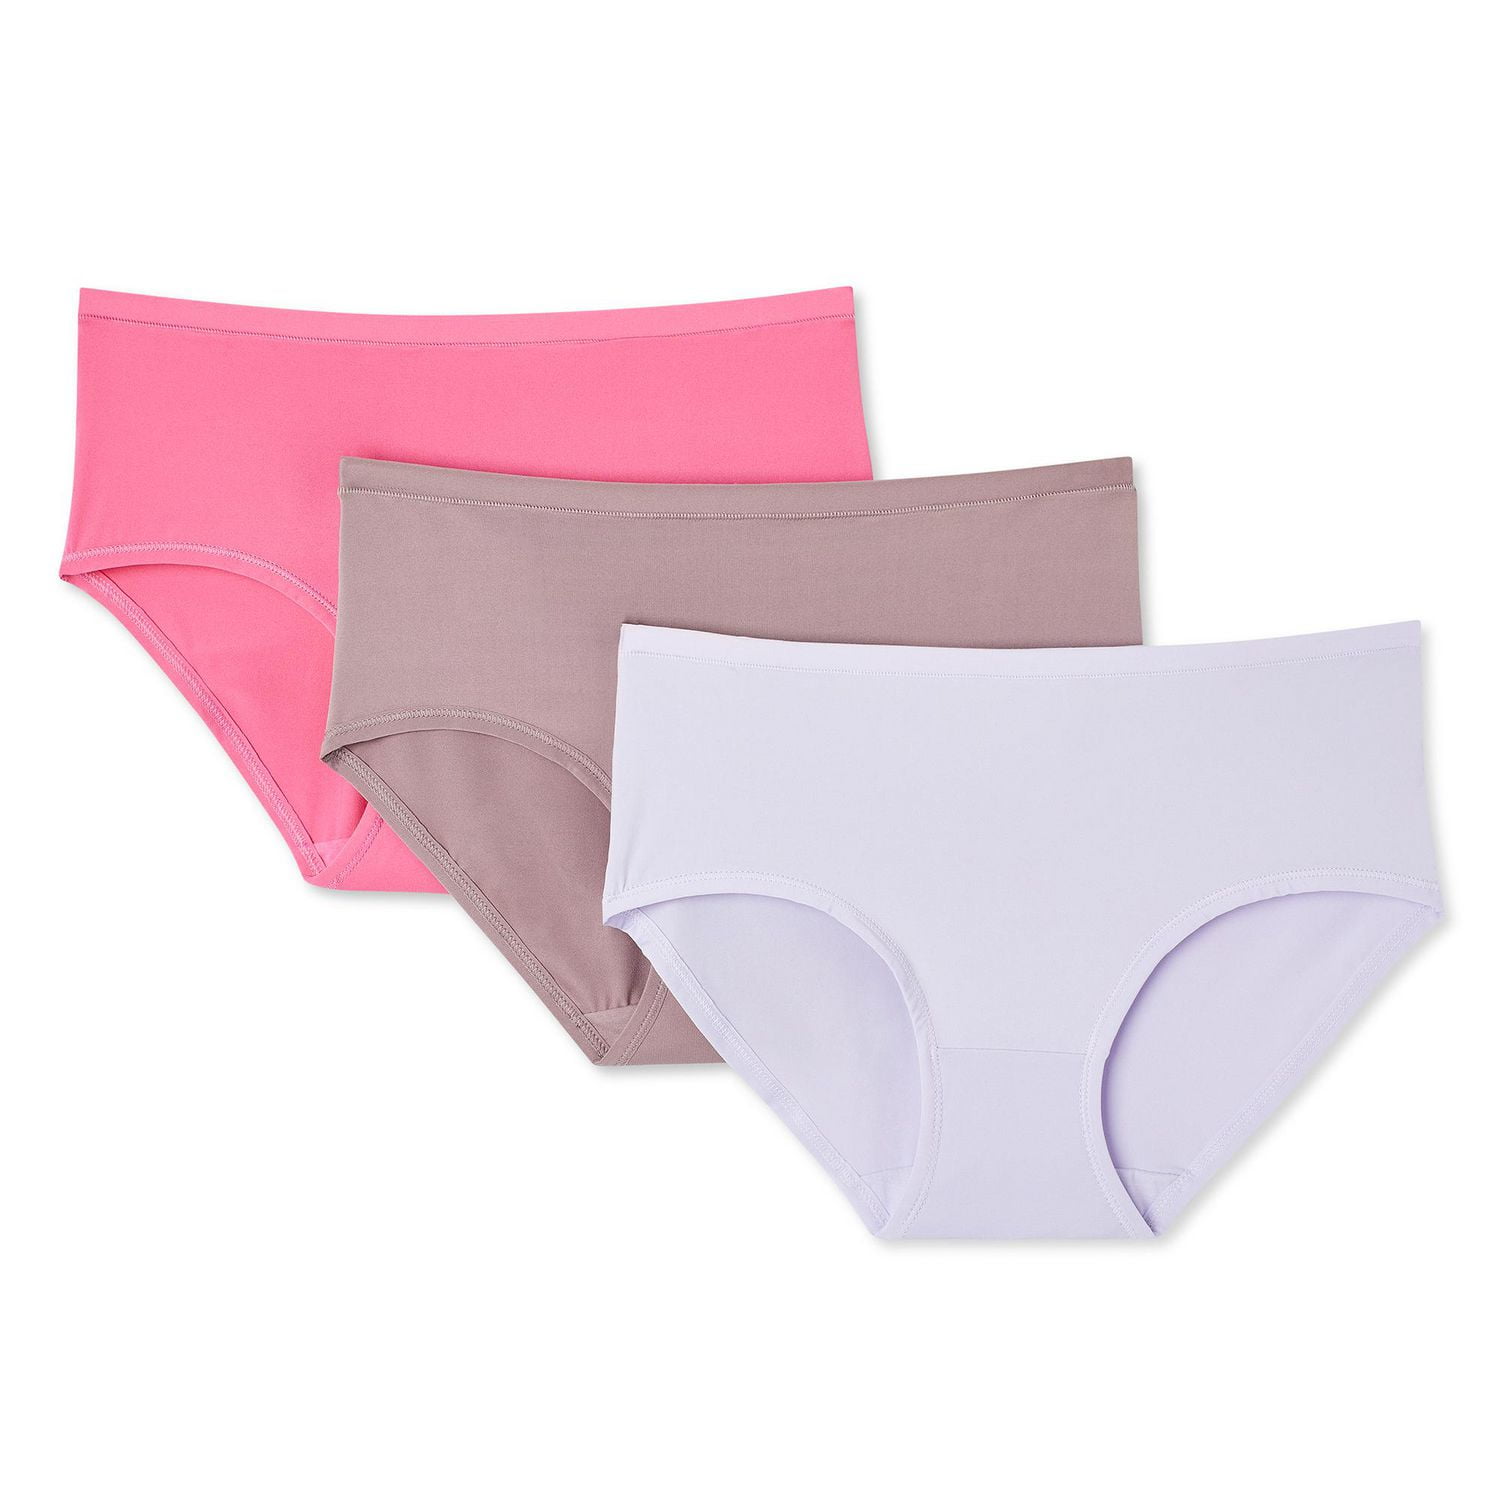 Types of Underwear for Women - Superlabelstore